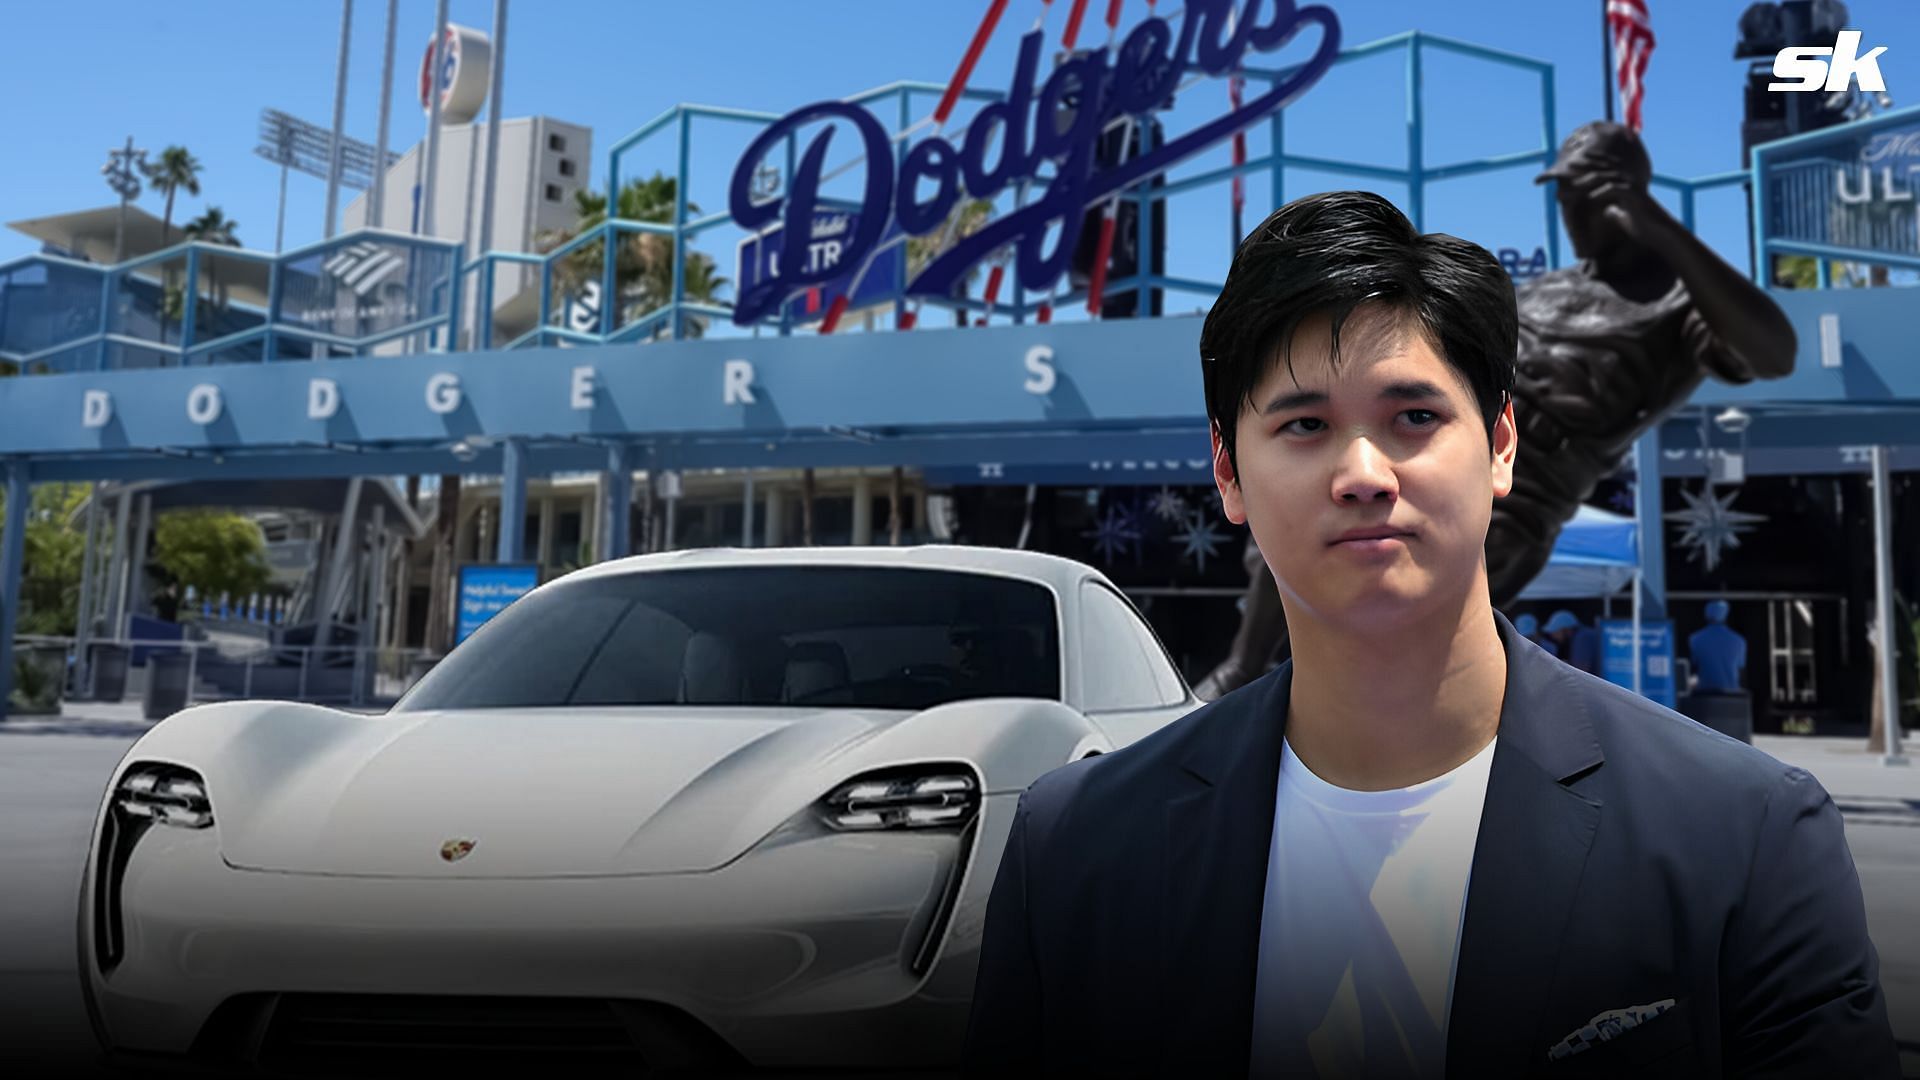 Dodgers superstar Shohei Ohtani makes a swanky spring training arrival in $151,400 Porsche 911 Targa